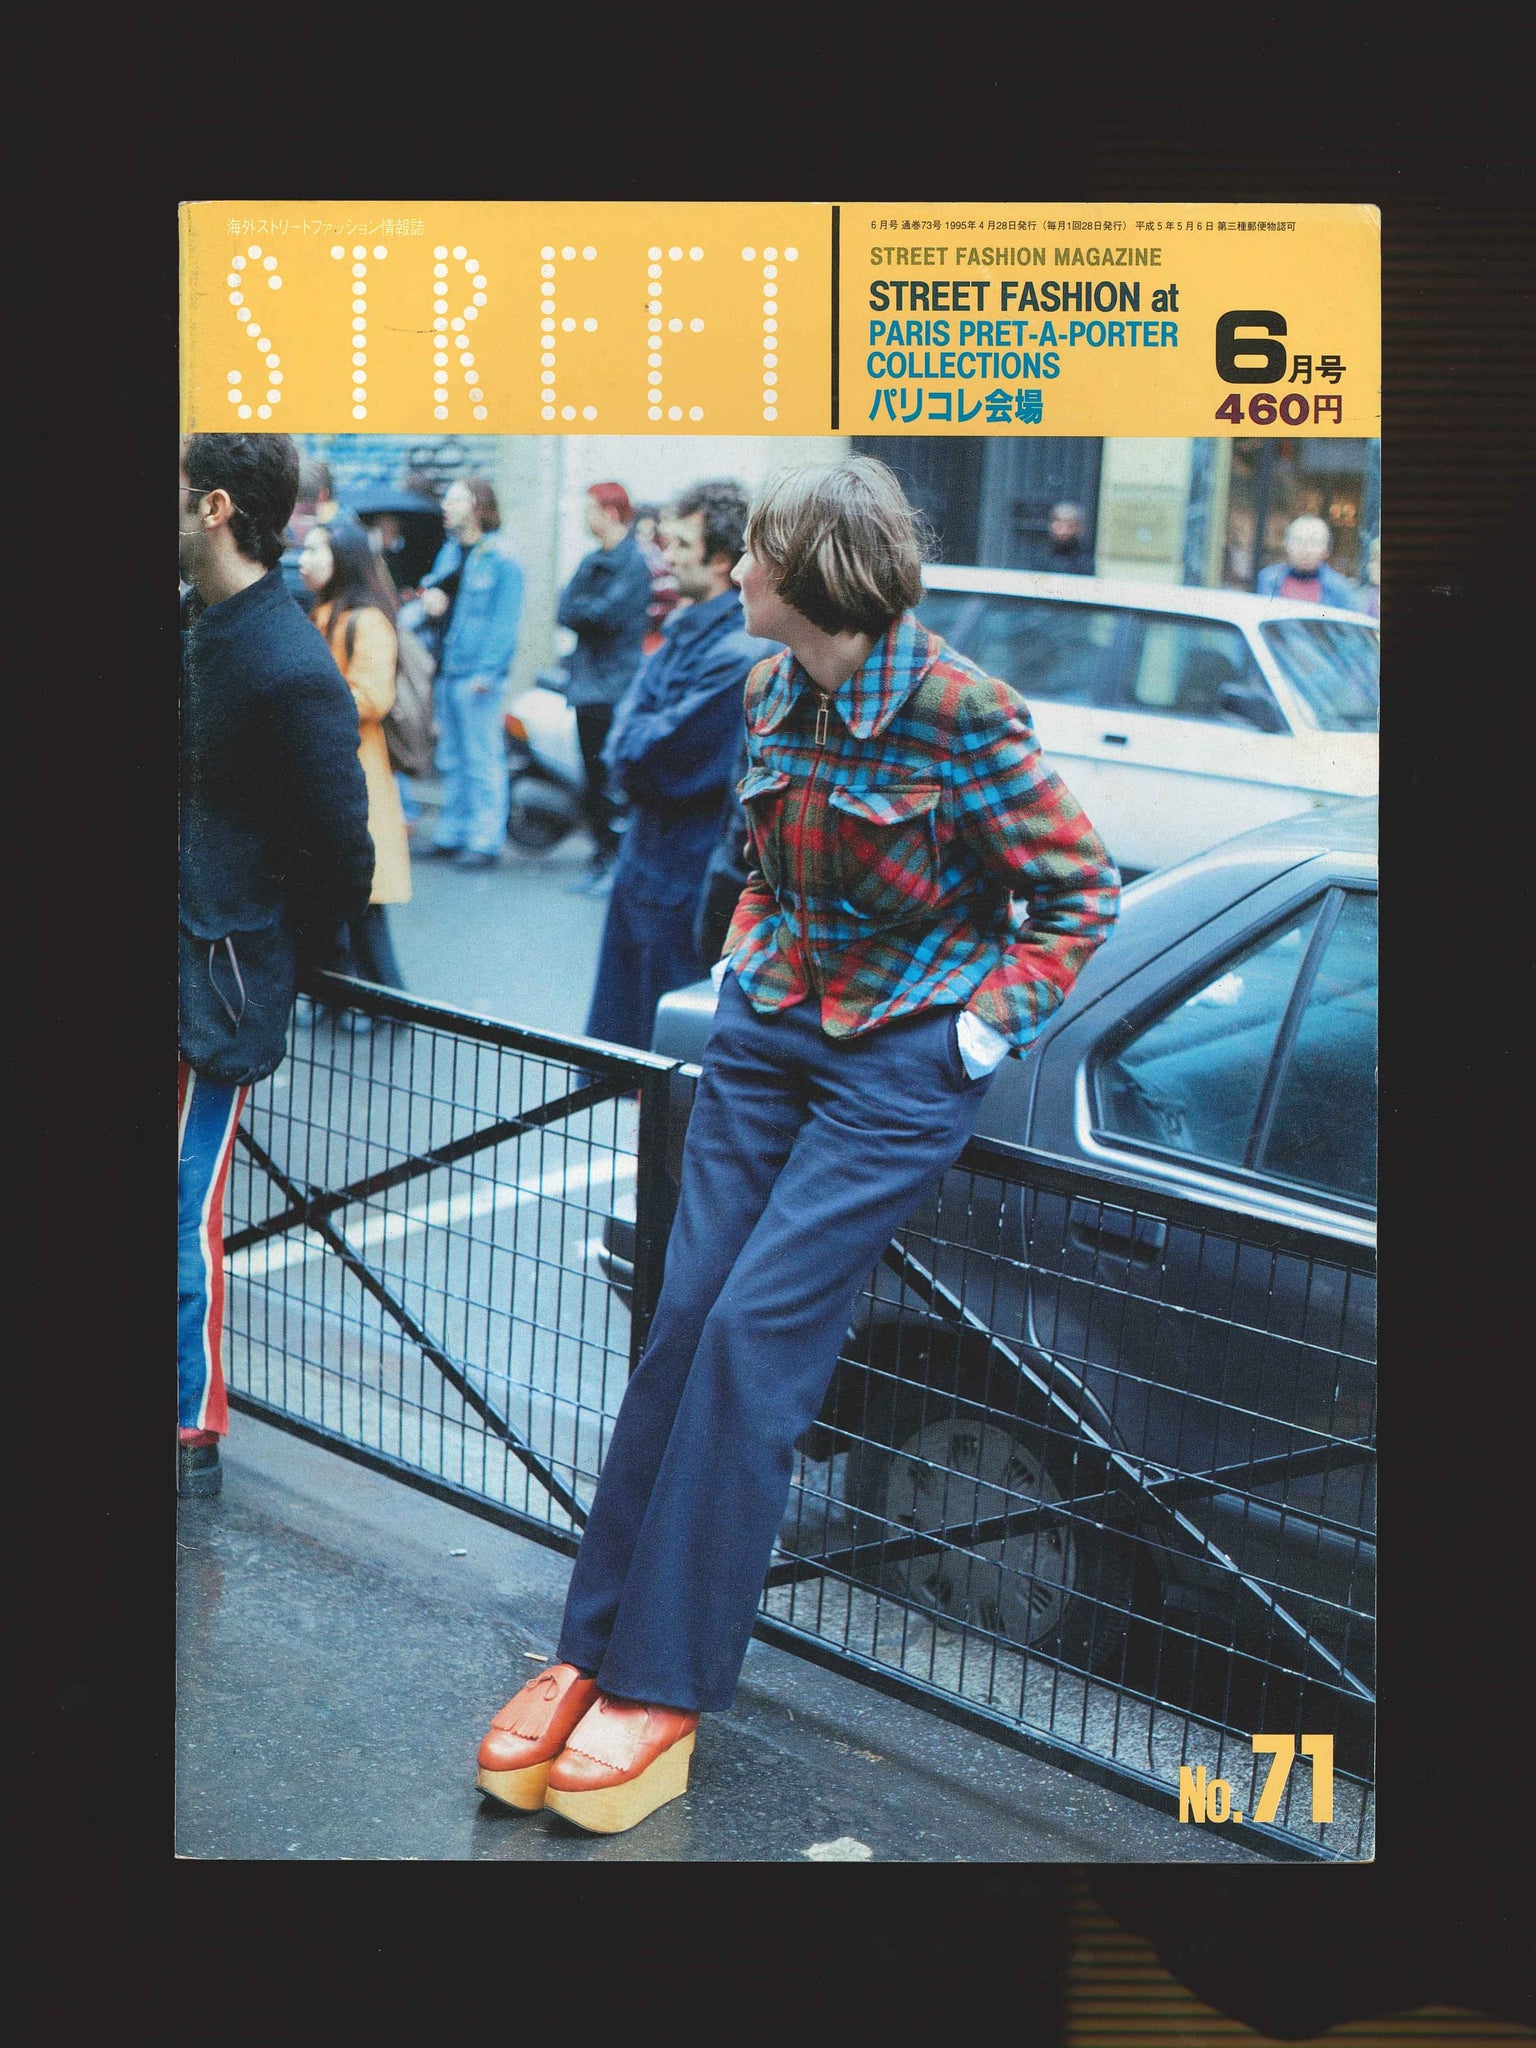 STREET magazine no. 71 / june 1995 / paris collections / Shoichi Aoki